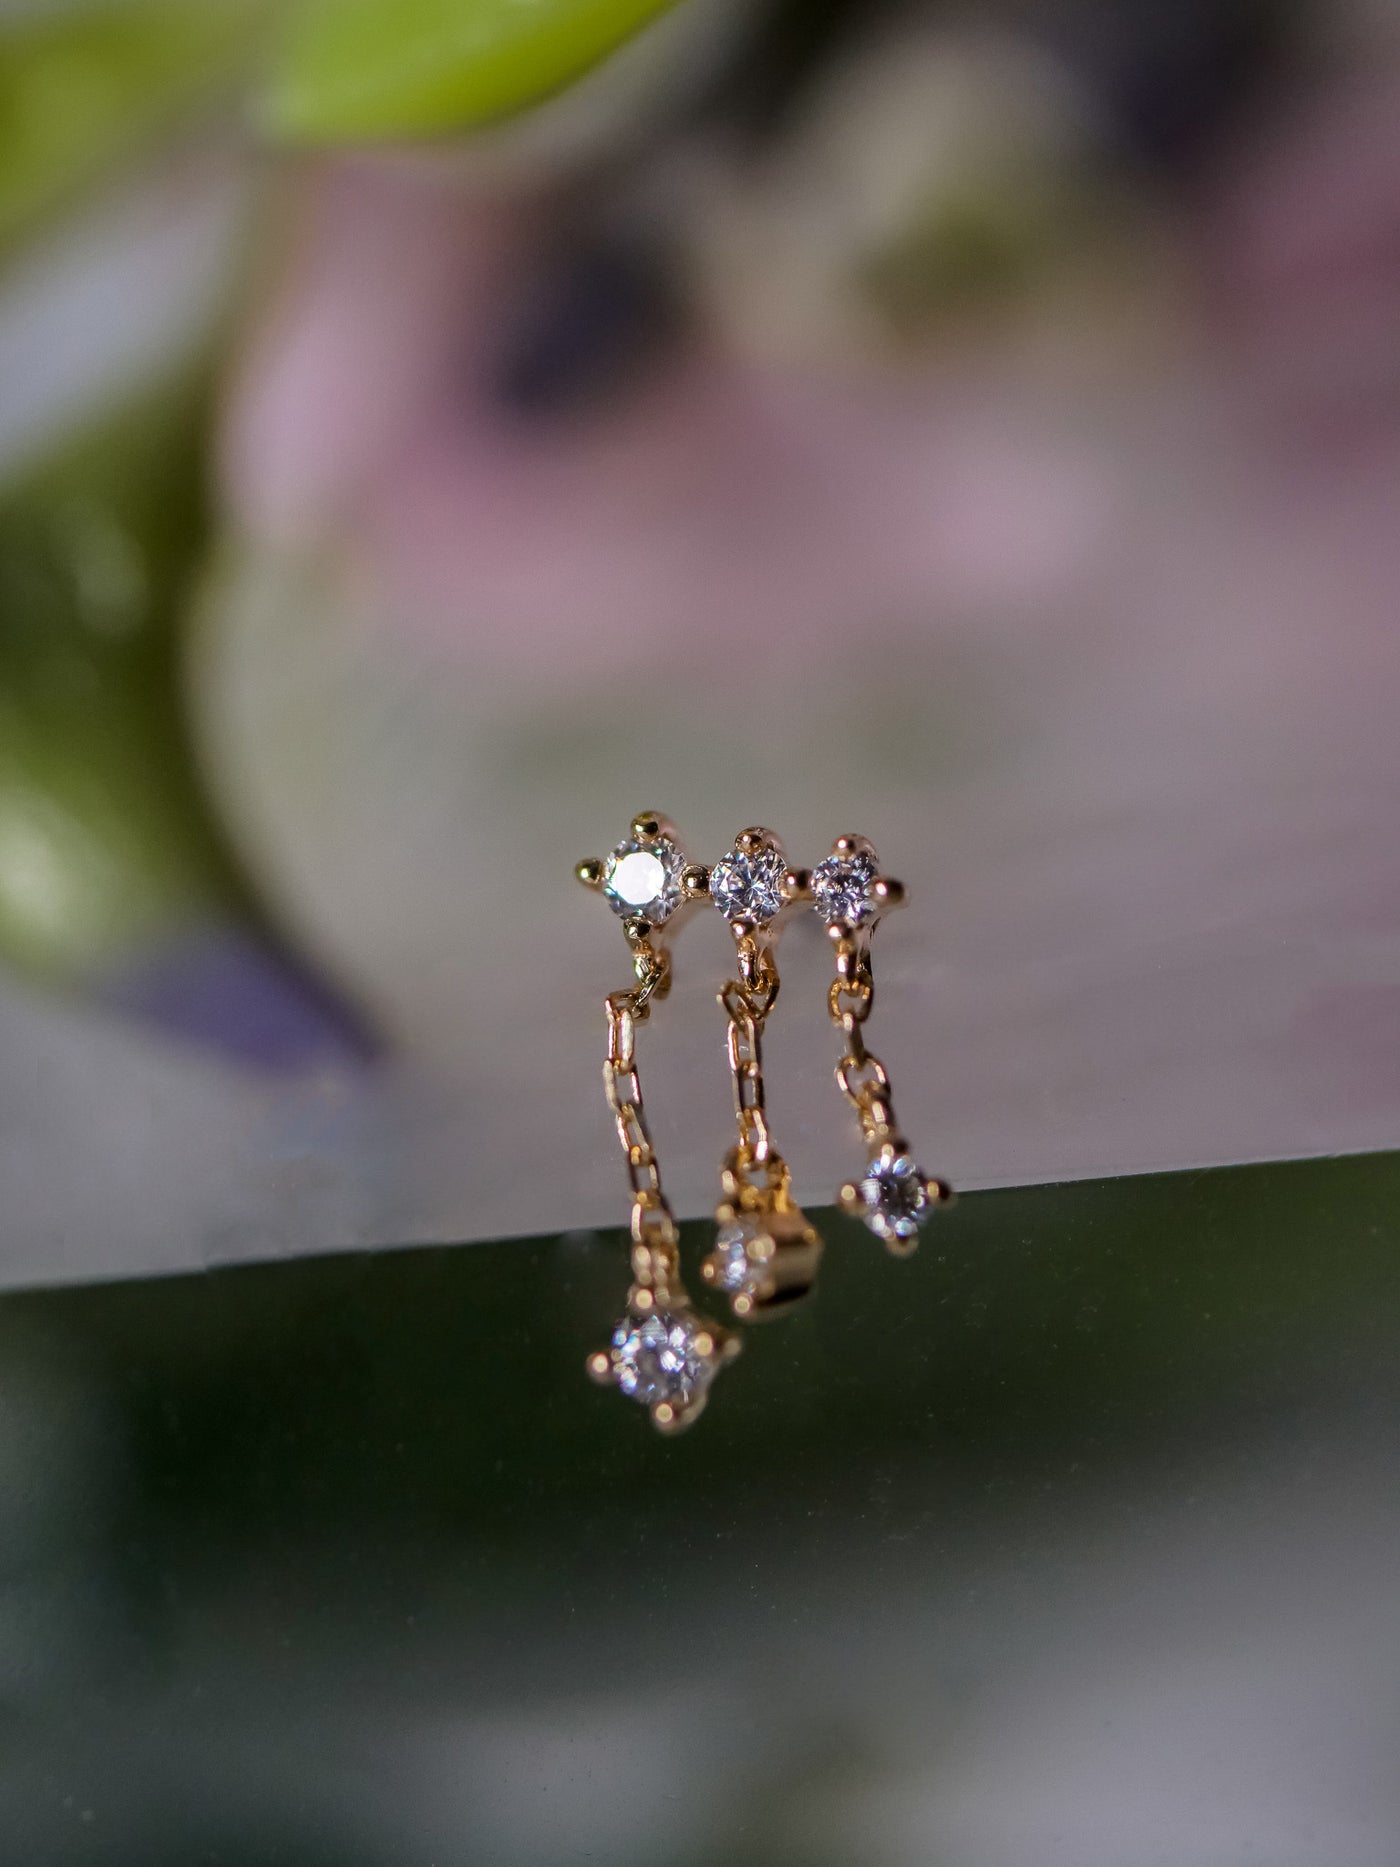 cascade - swarovski with hanging gems on gold chains